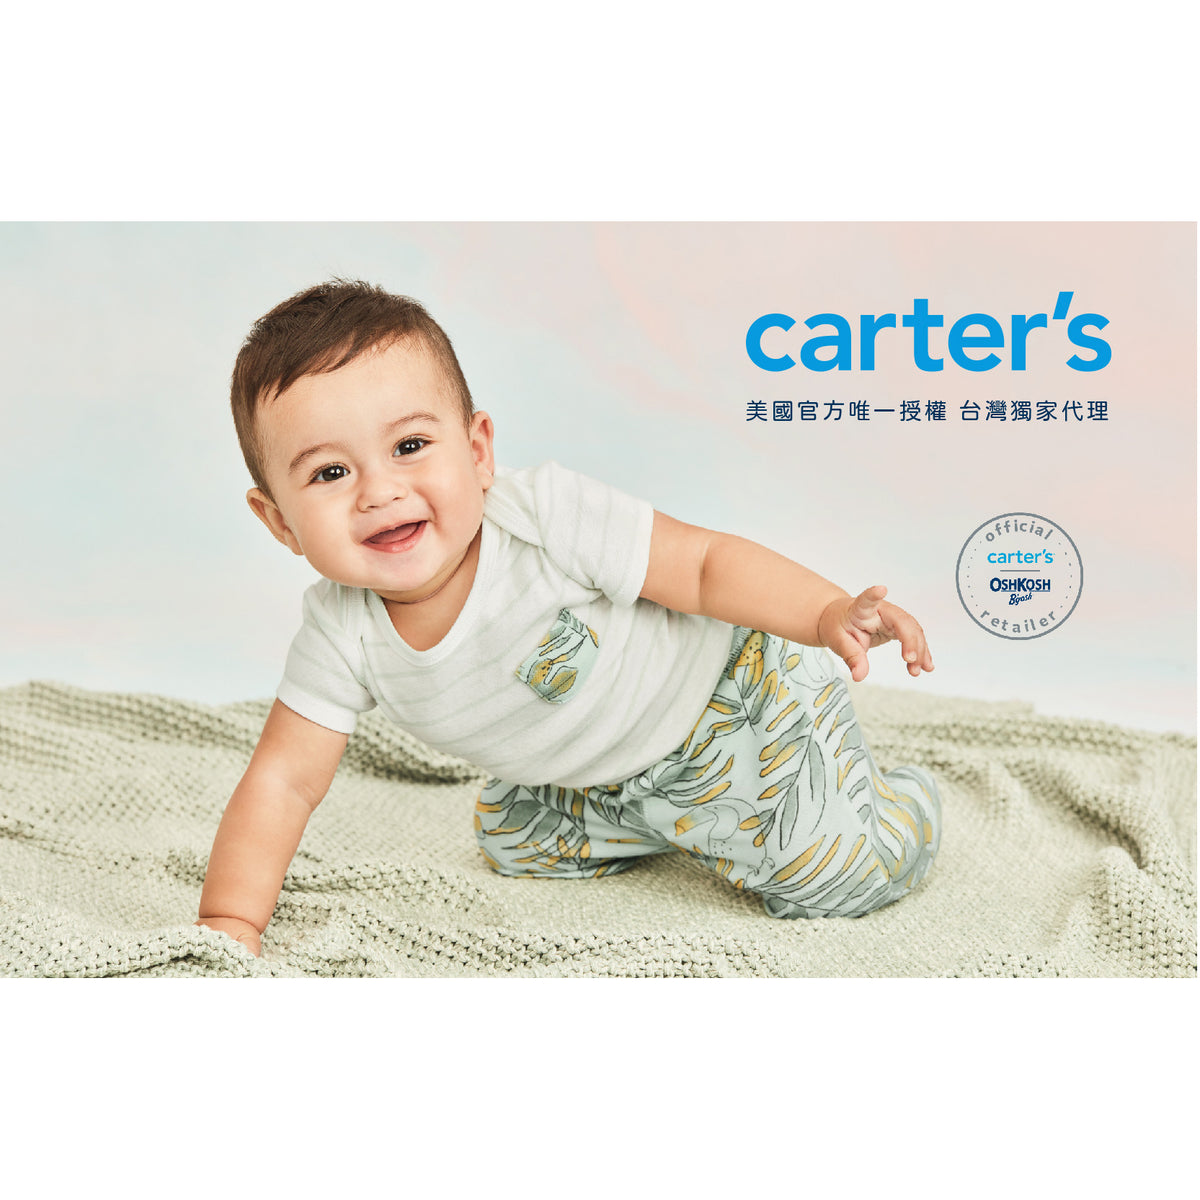 Carter's Chameleon Adventure Shorts (6M-24M)